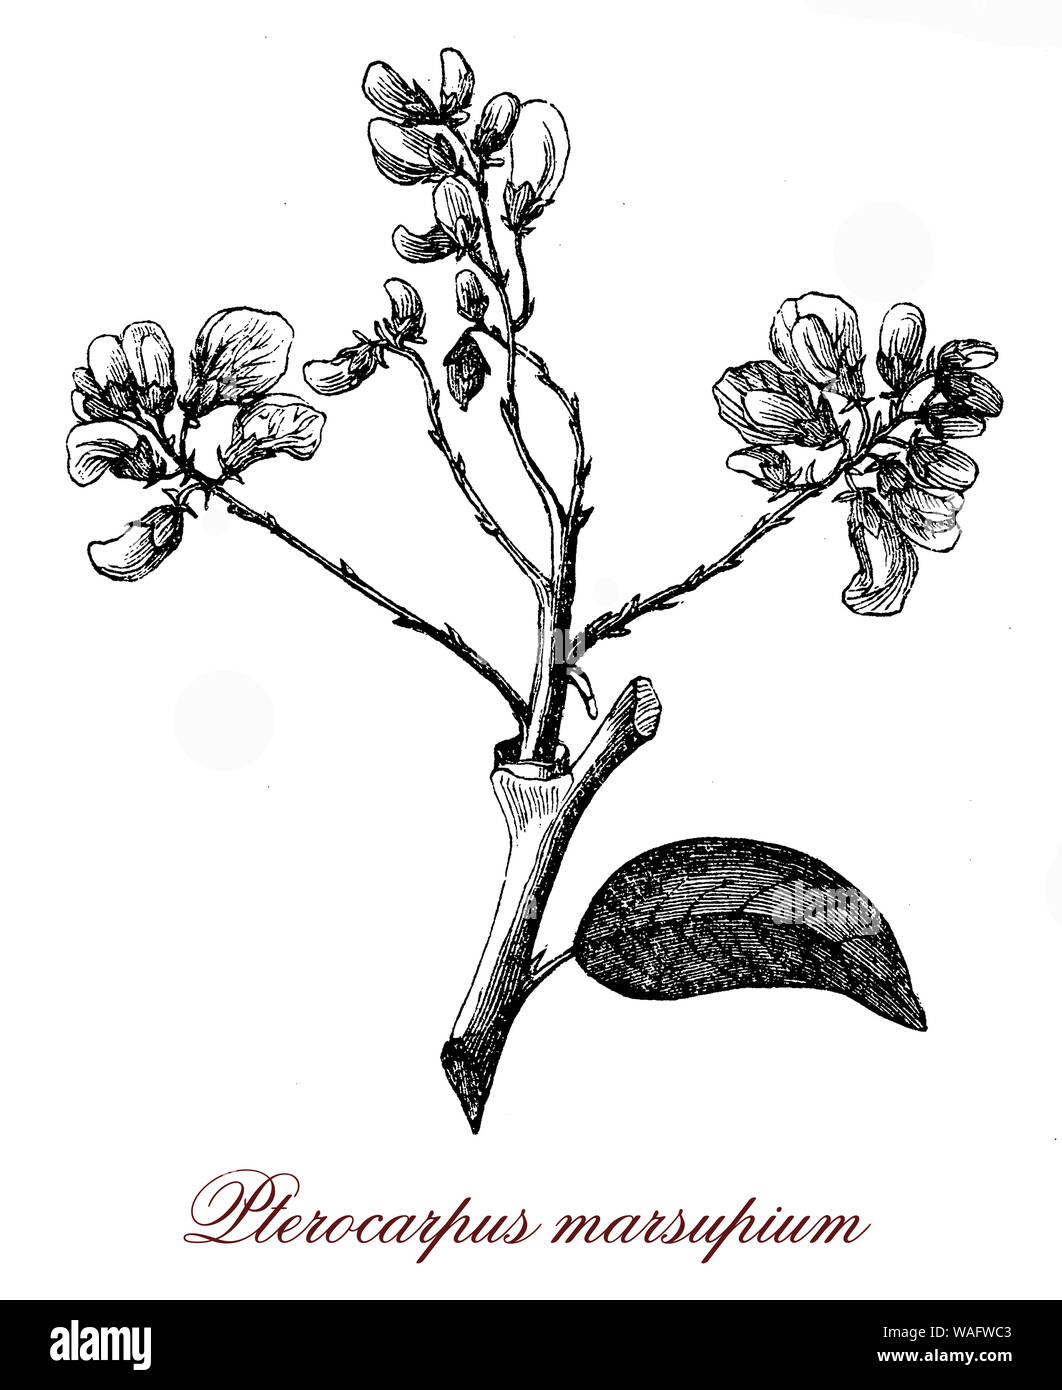 Pterocarpus marsupium tree native to India and medicinal plant Stock Photo